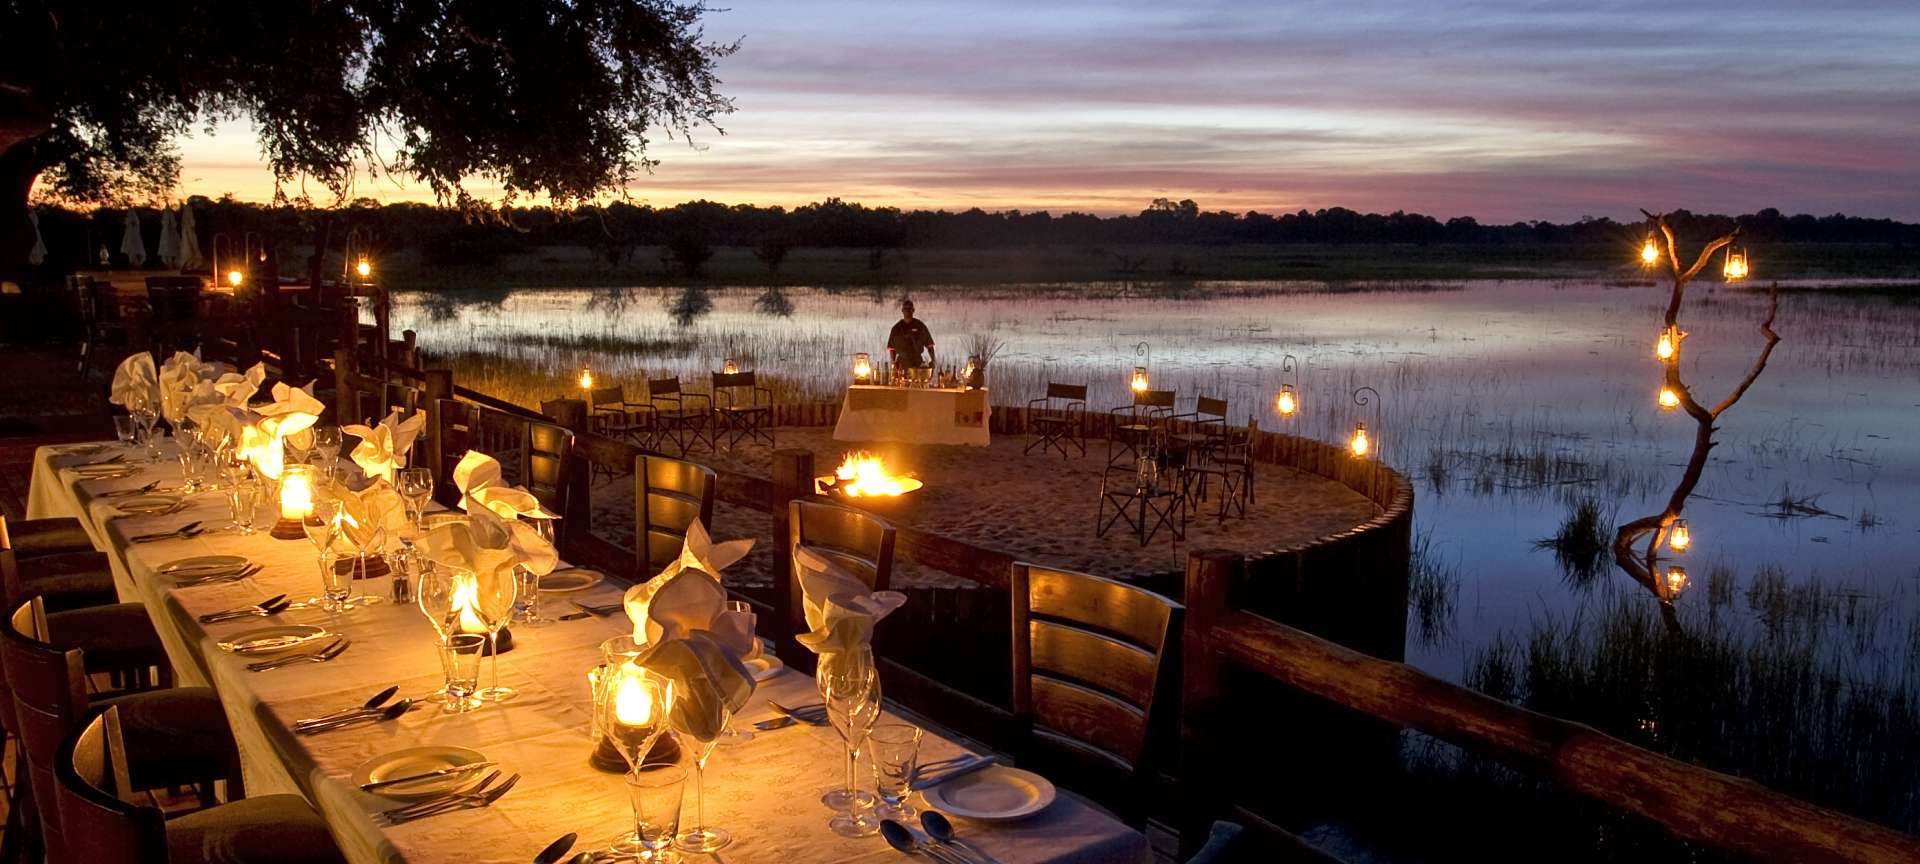 Luxury accommodation in Botswana